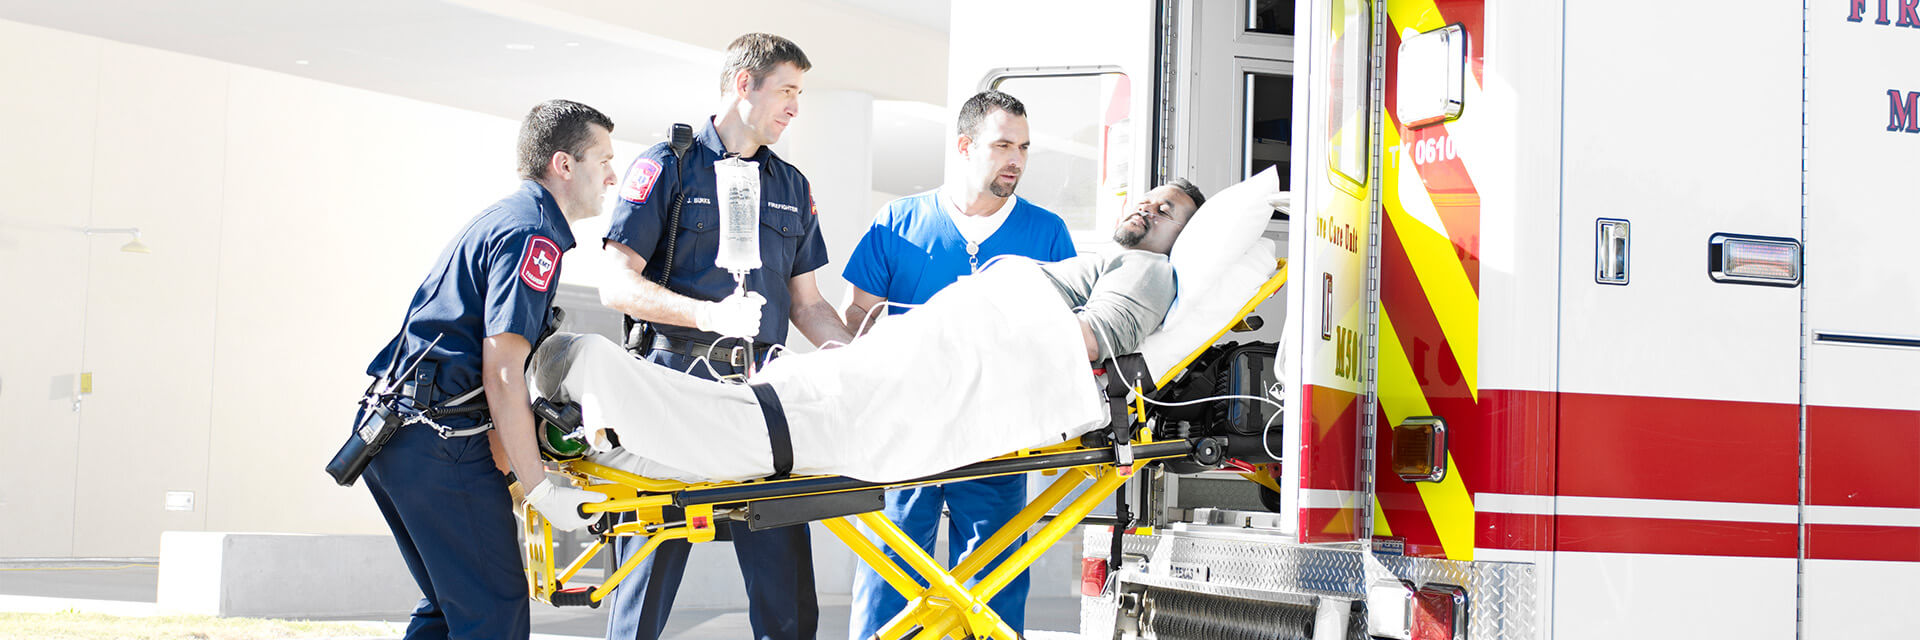 Man on stretcher in ambulance